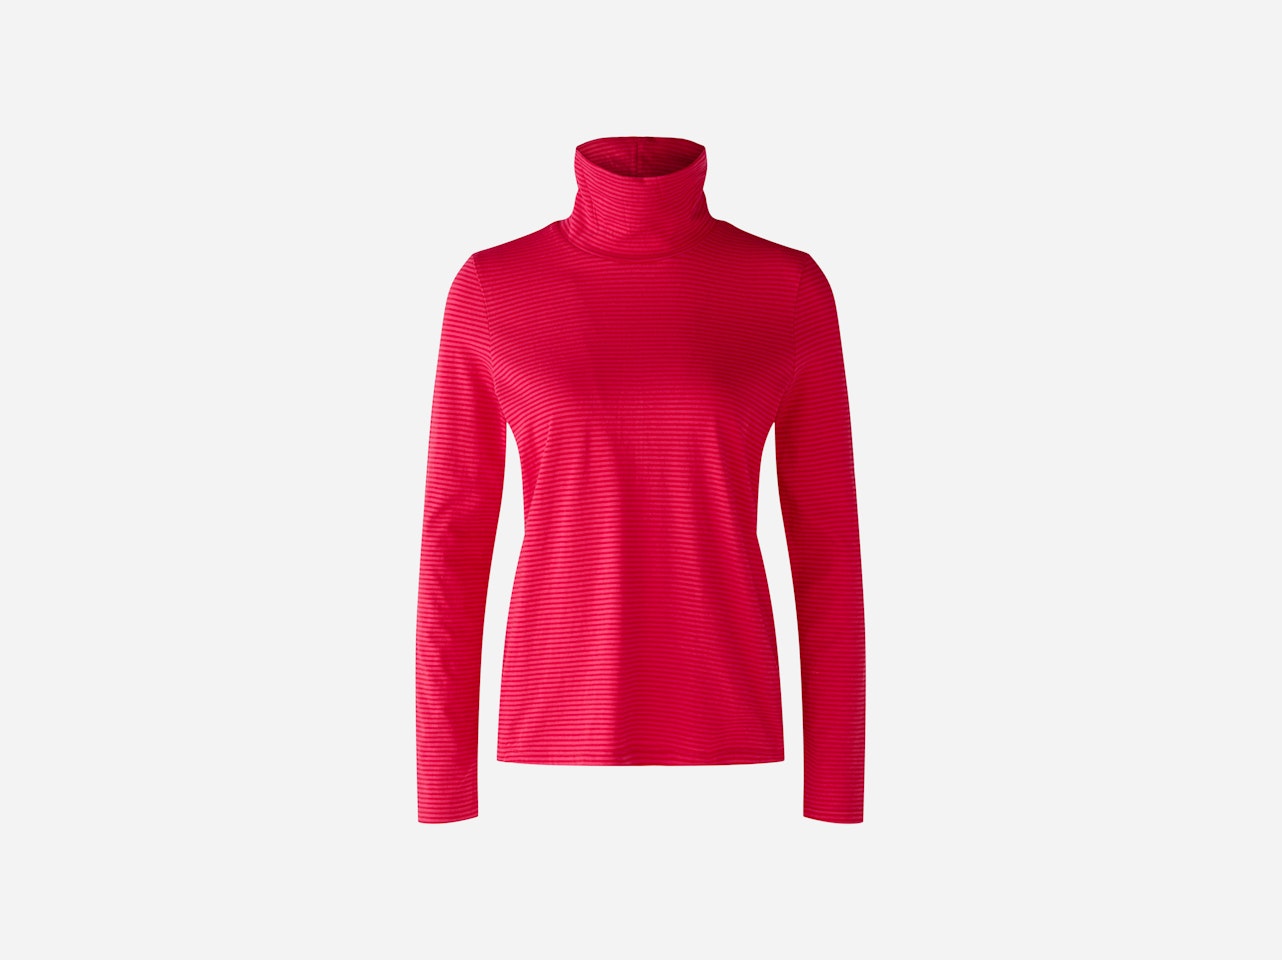 Bild 7 von Long-sleeved shirt 100% Organic Cotton in red rose | Oui